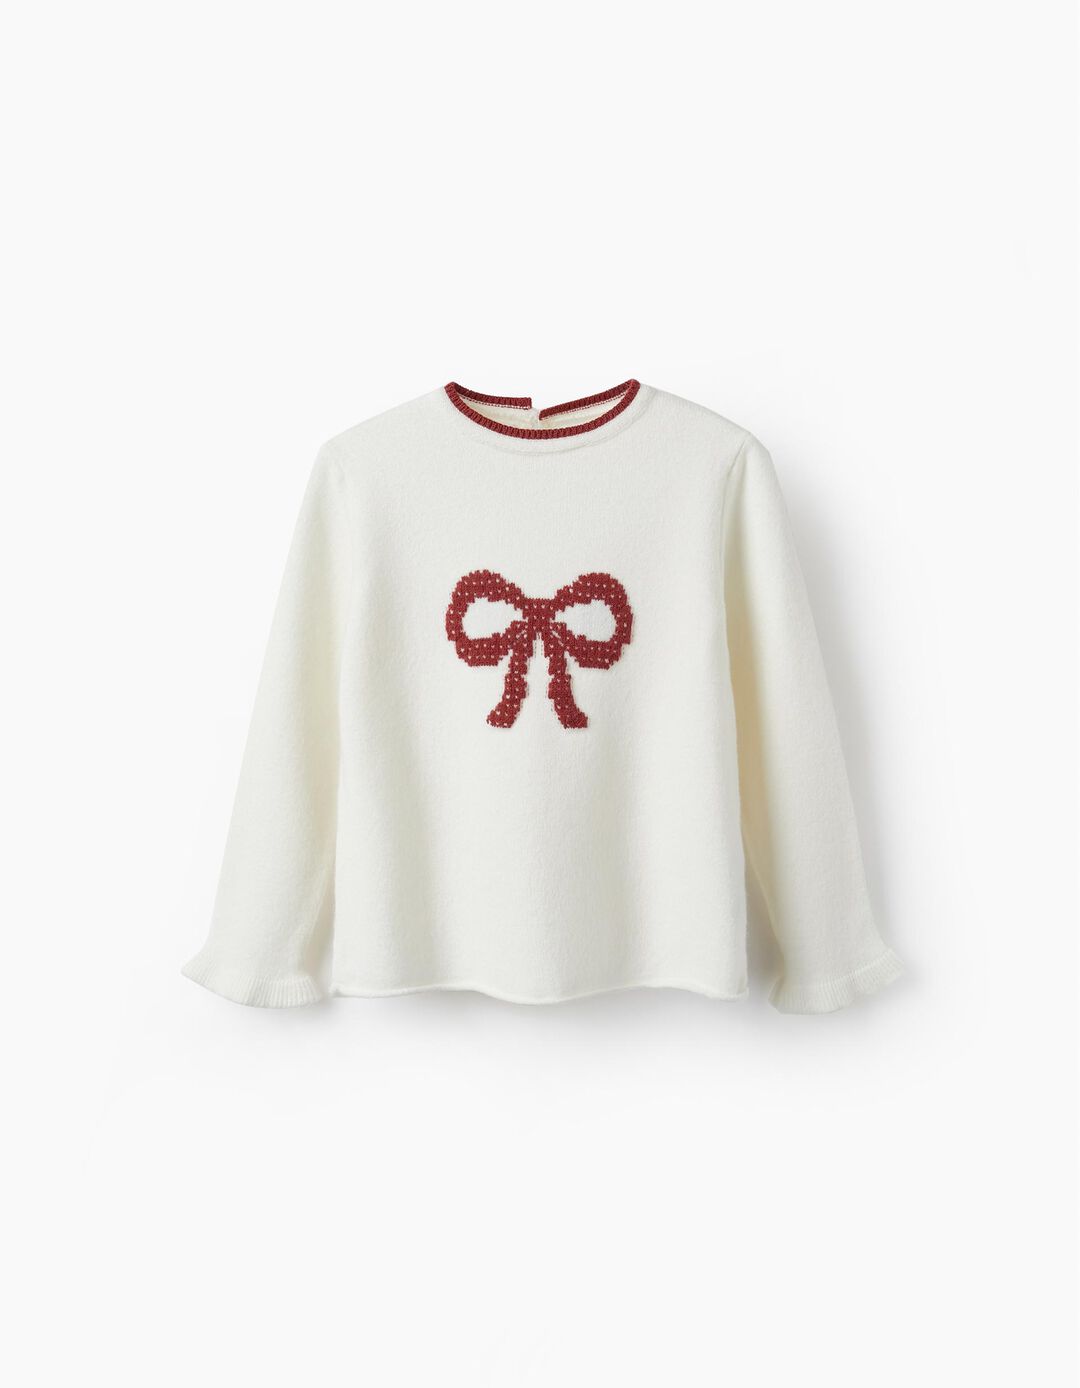 Knitted Jumper for Girls 'Bow', White